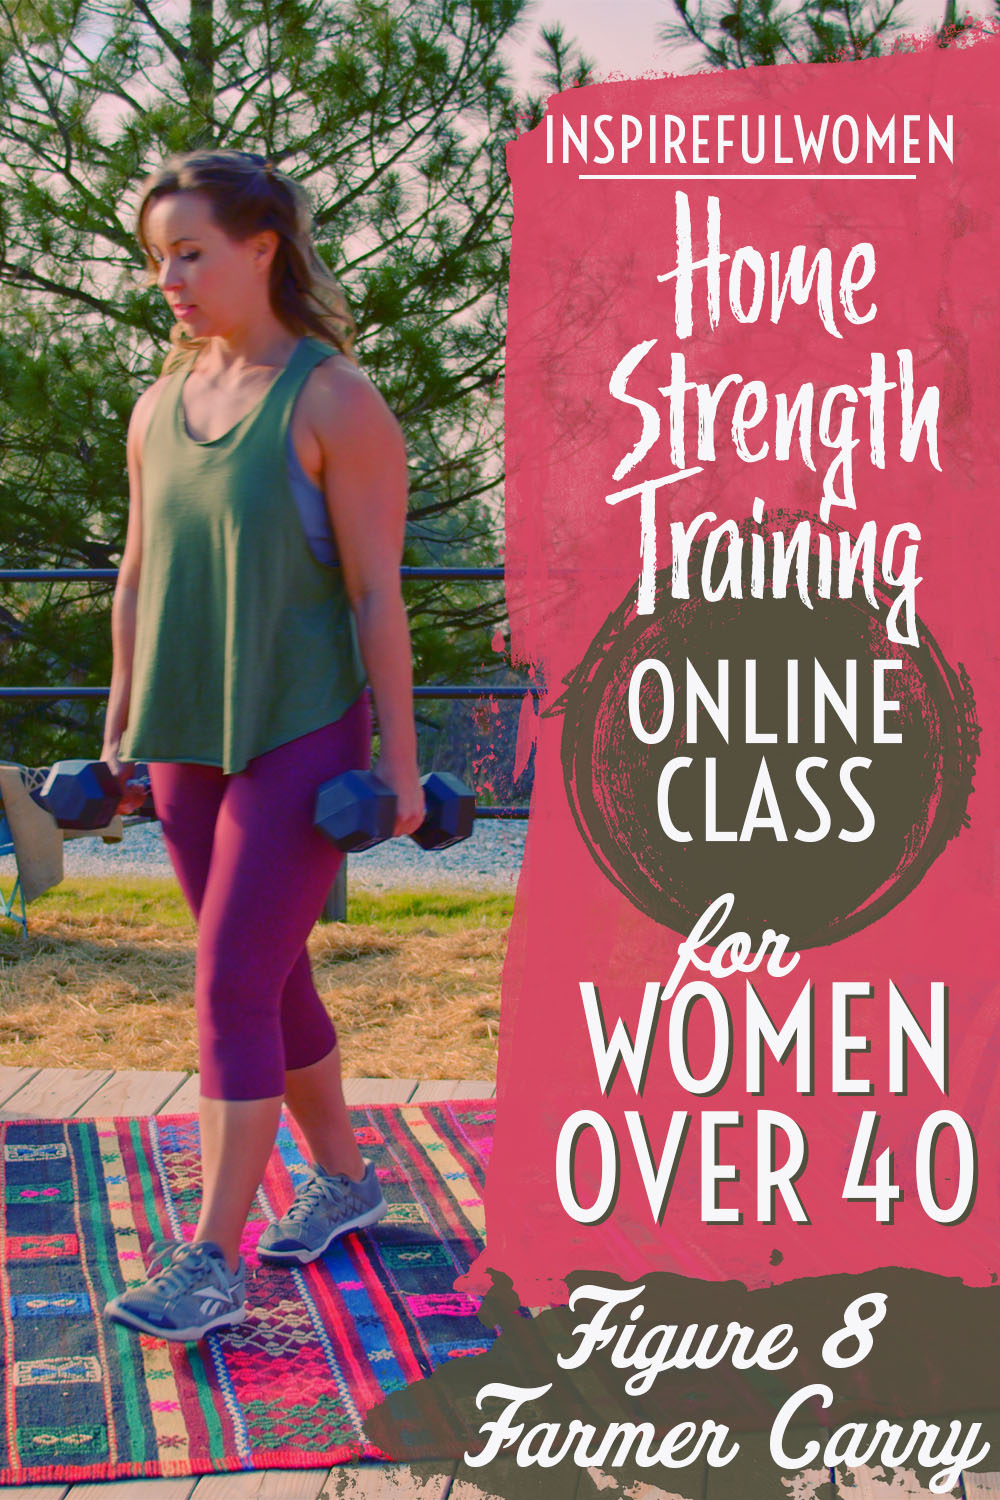 figure-8-farmer-carry-dumbbells-total-body-core-exercise-home-strength-training-women-40+